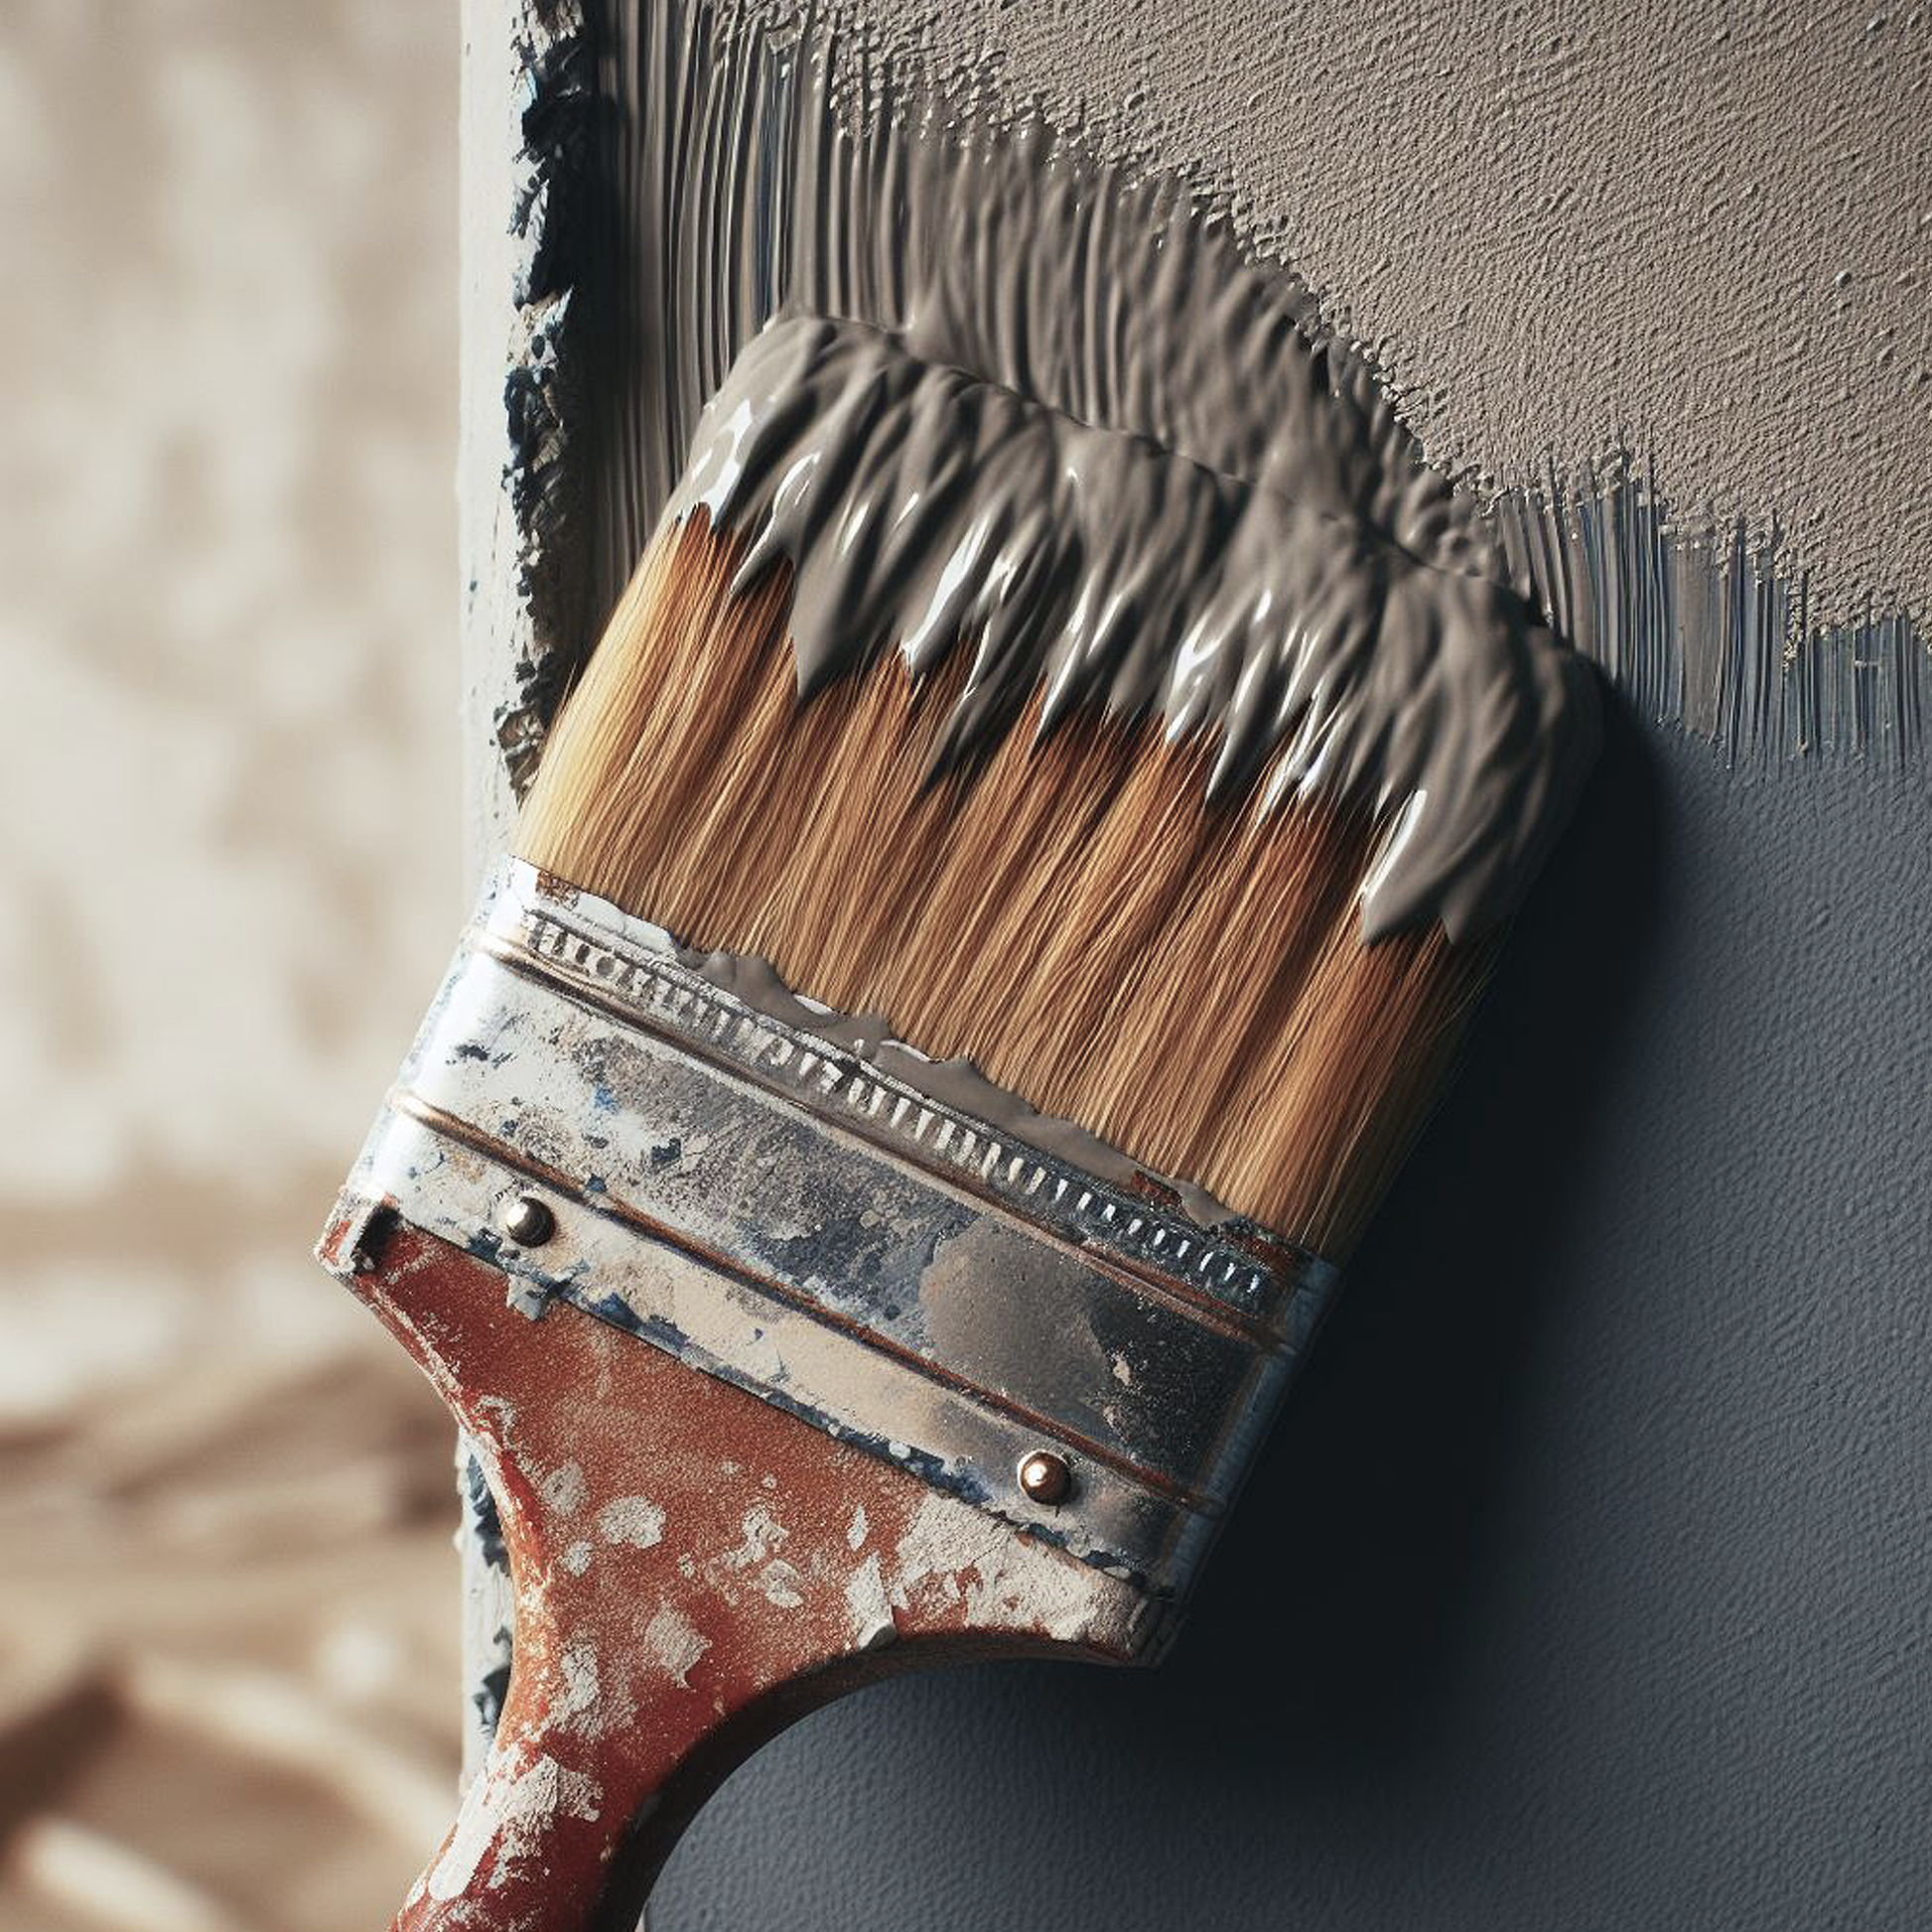 chelsea gray paint brush